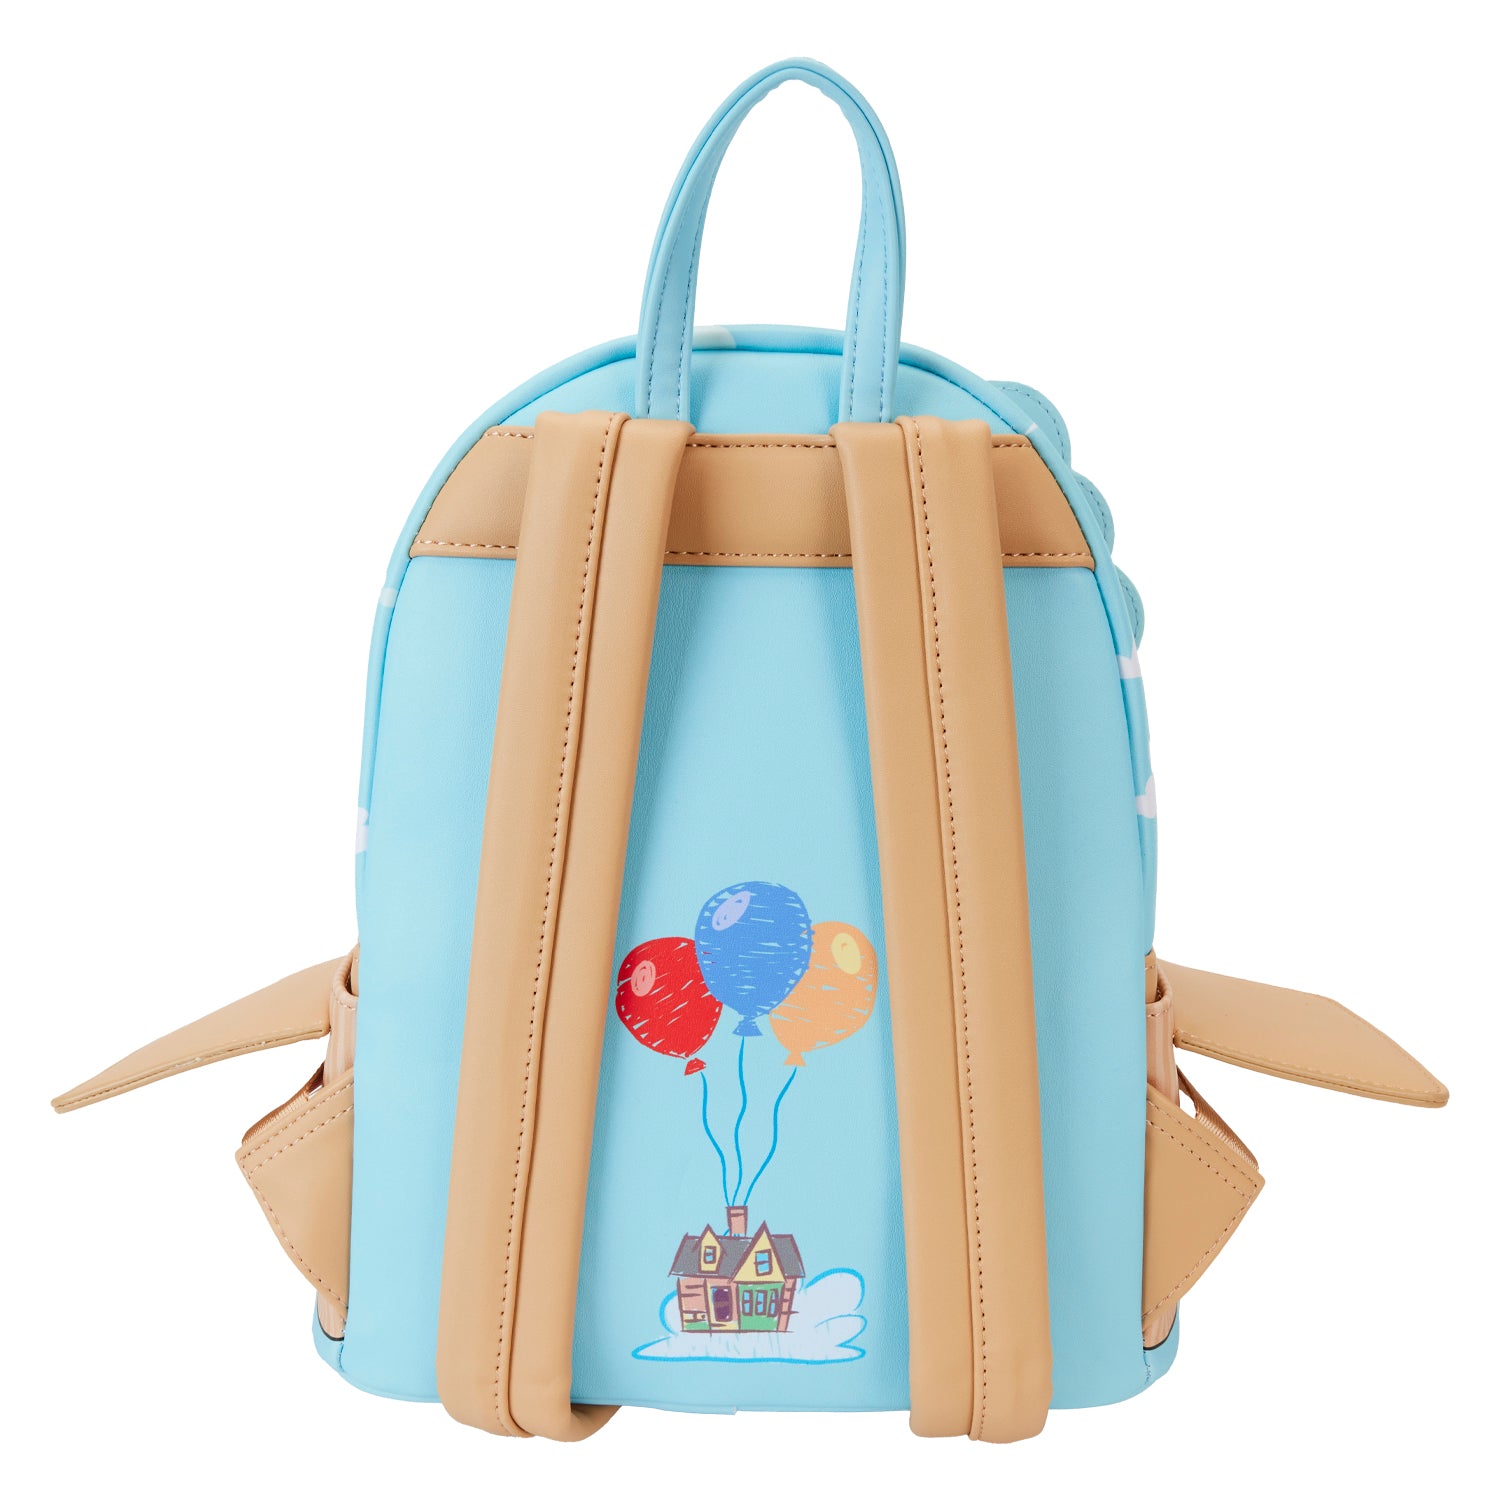 Pixar | Up Spirit of Adventure Mini Backpack